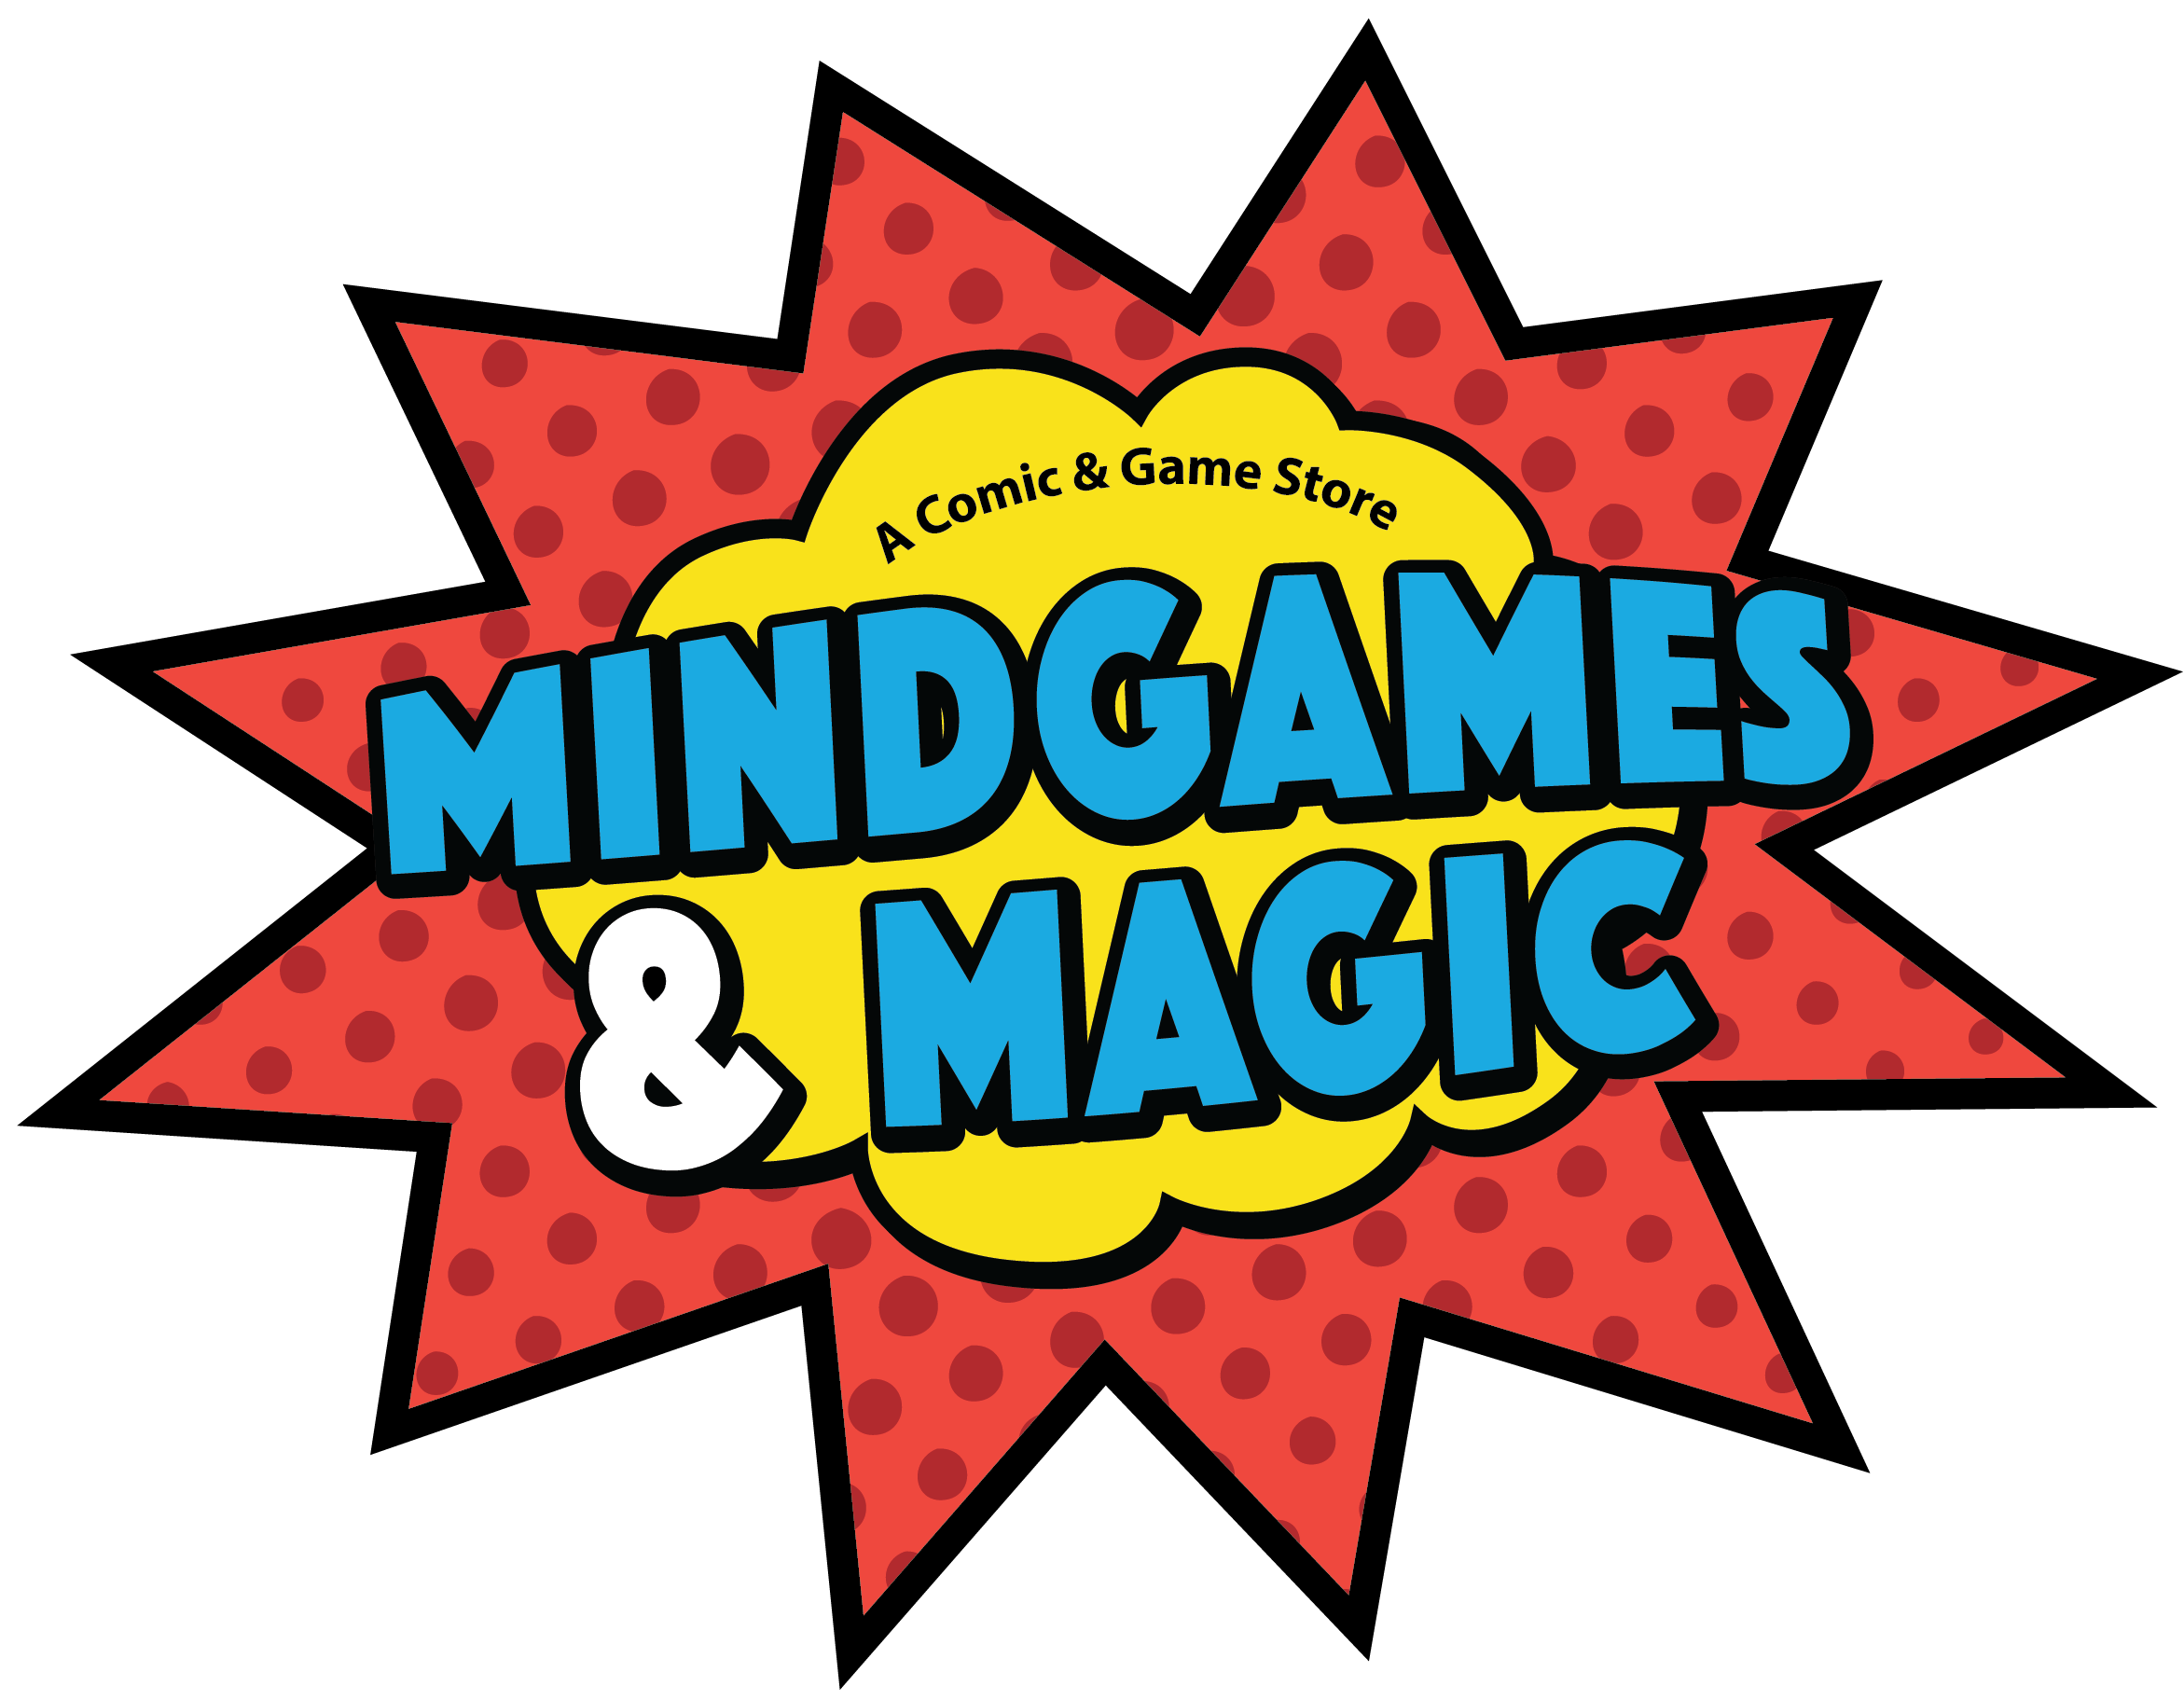 Mindgames and Magic